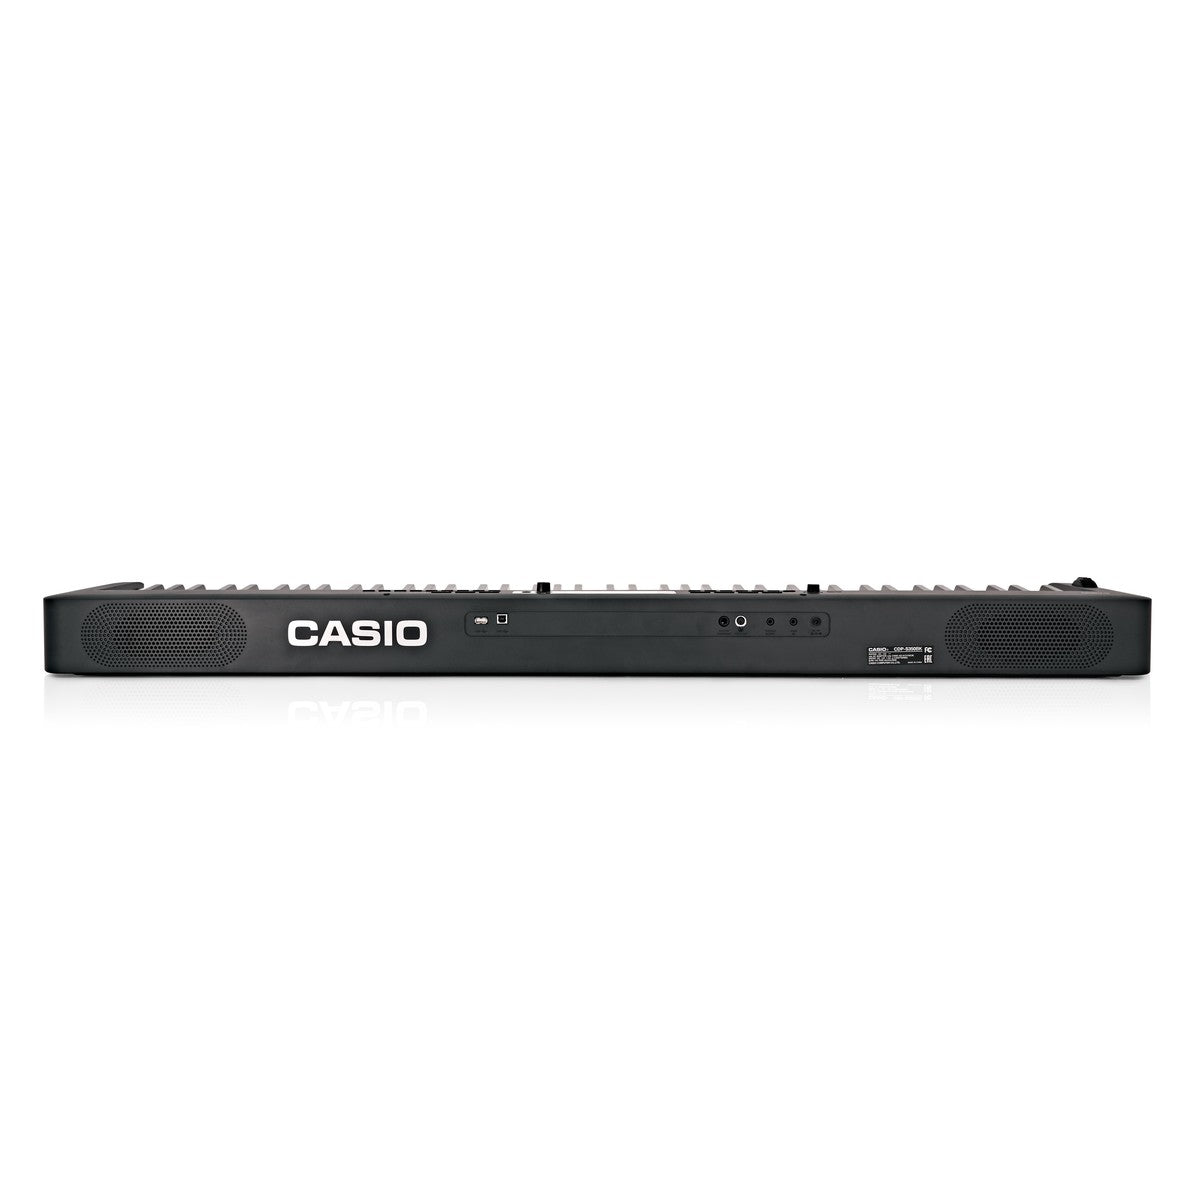 Casio CDP S350 Digital Piano